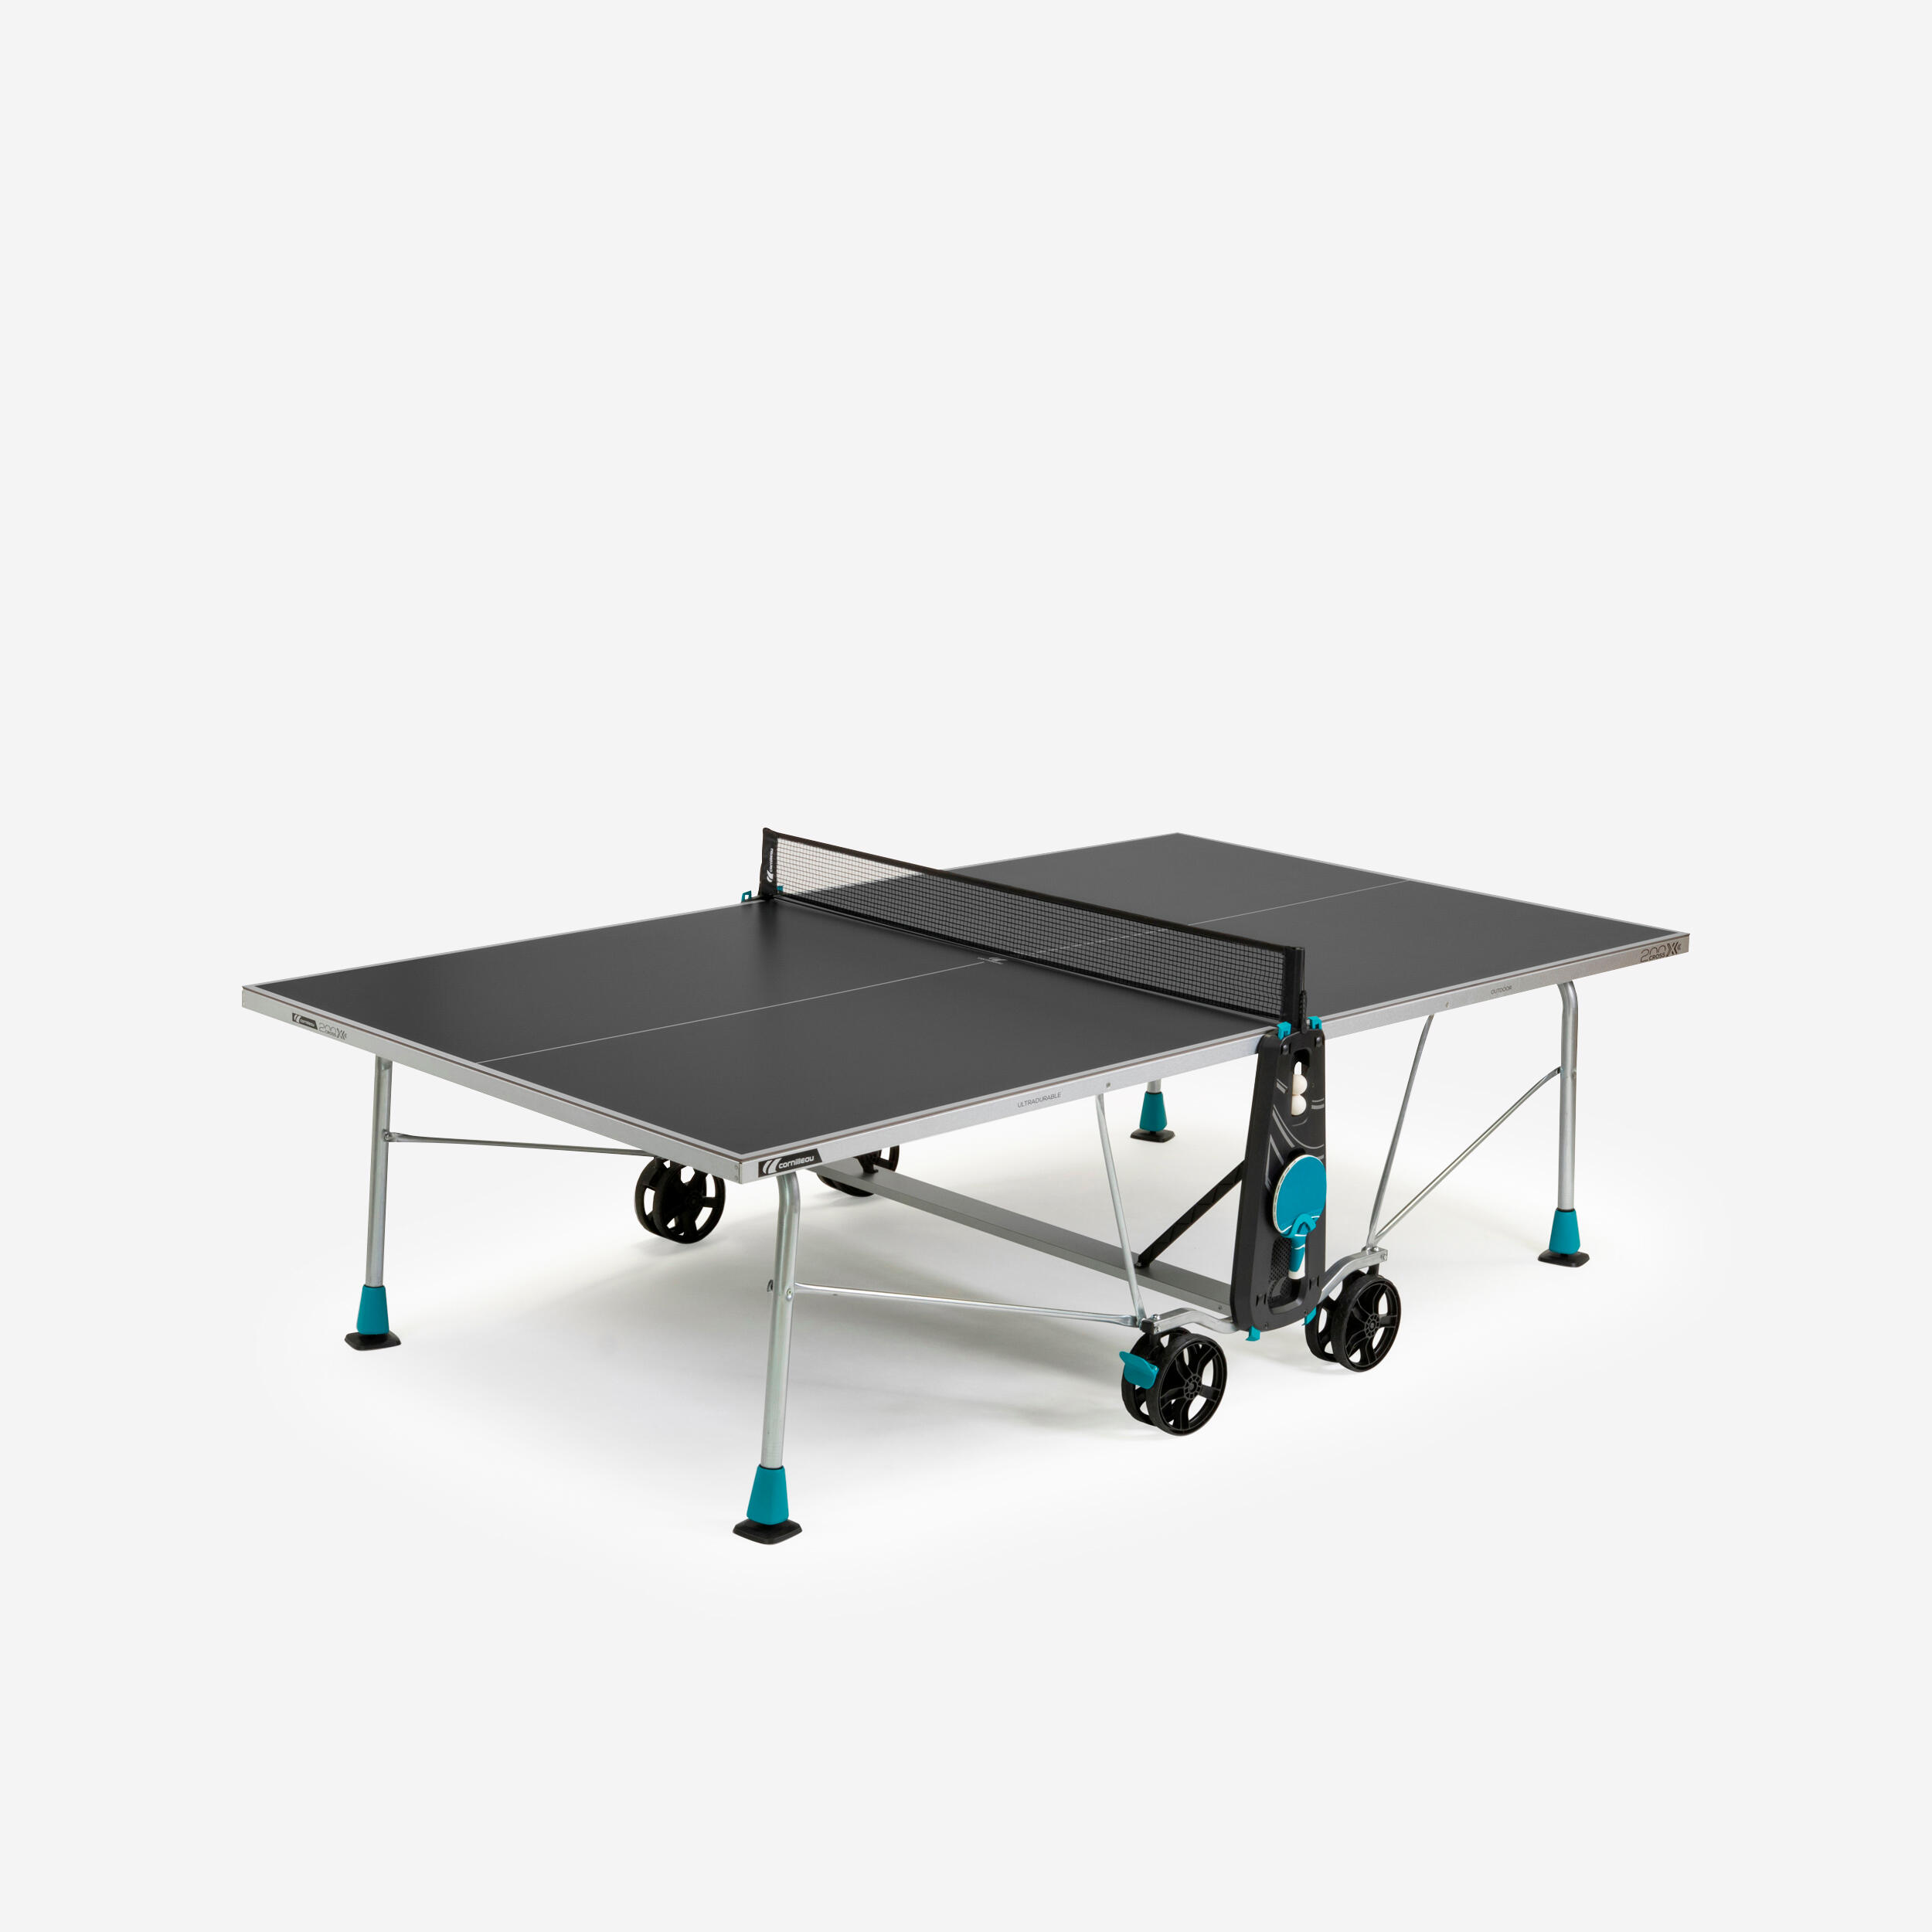 Outdoor Recreational Table Tennis Table 200X - Grey 1/10